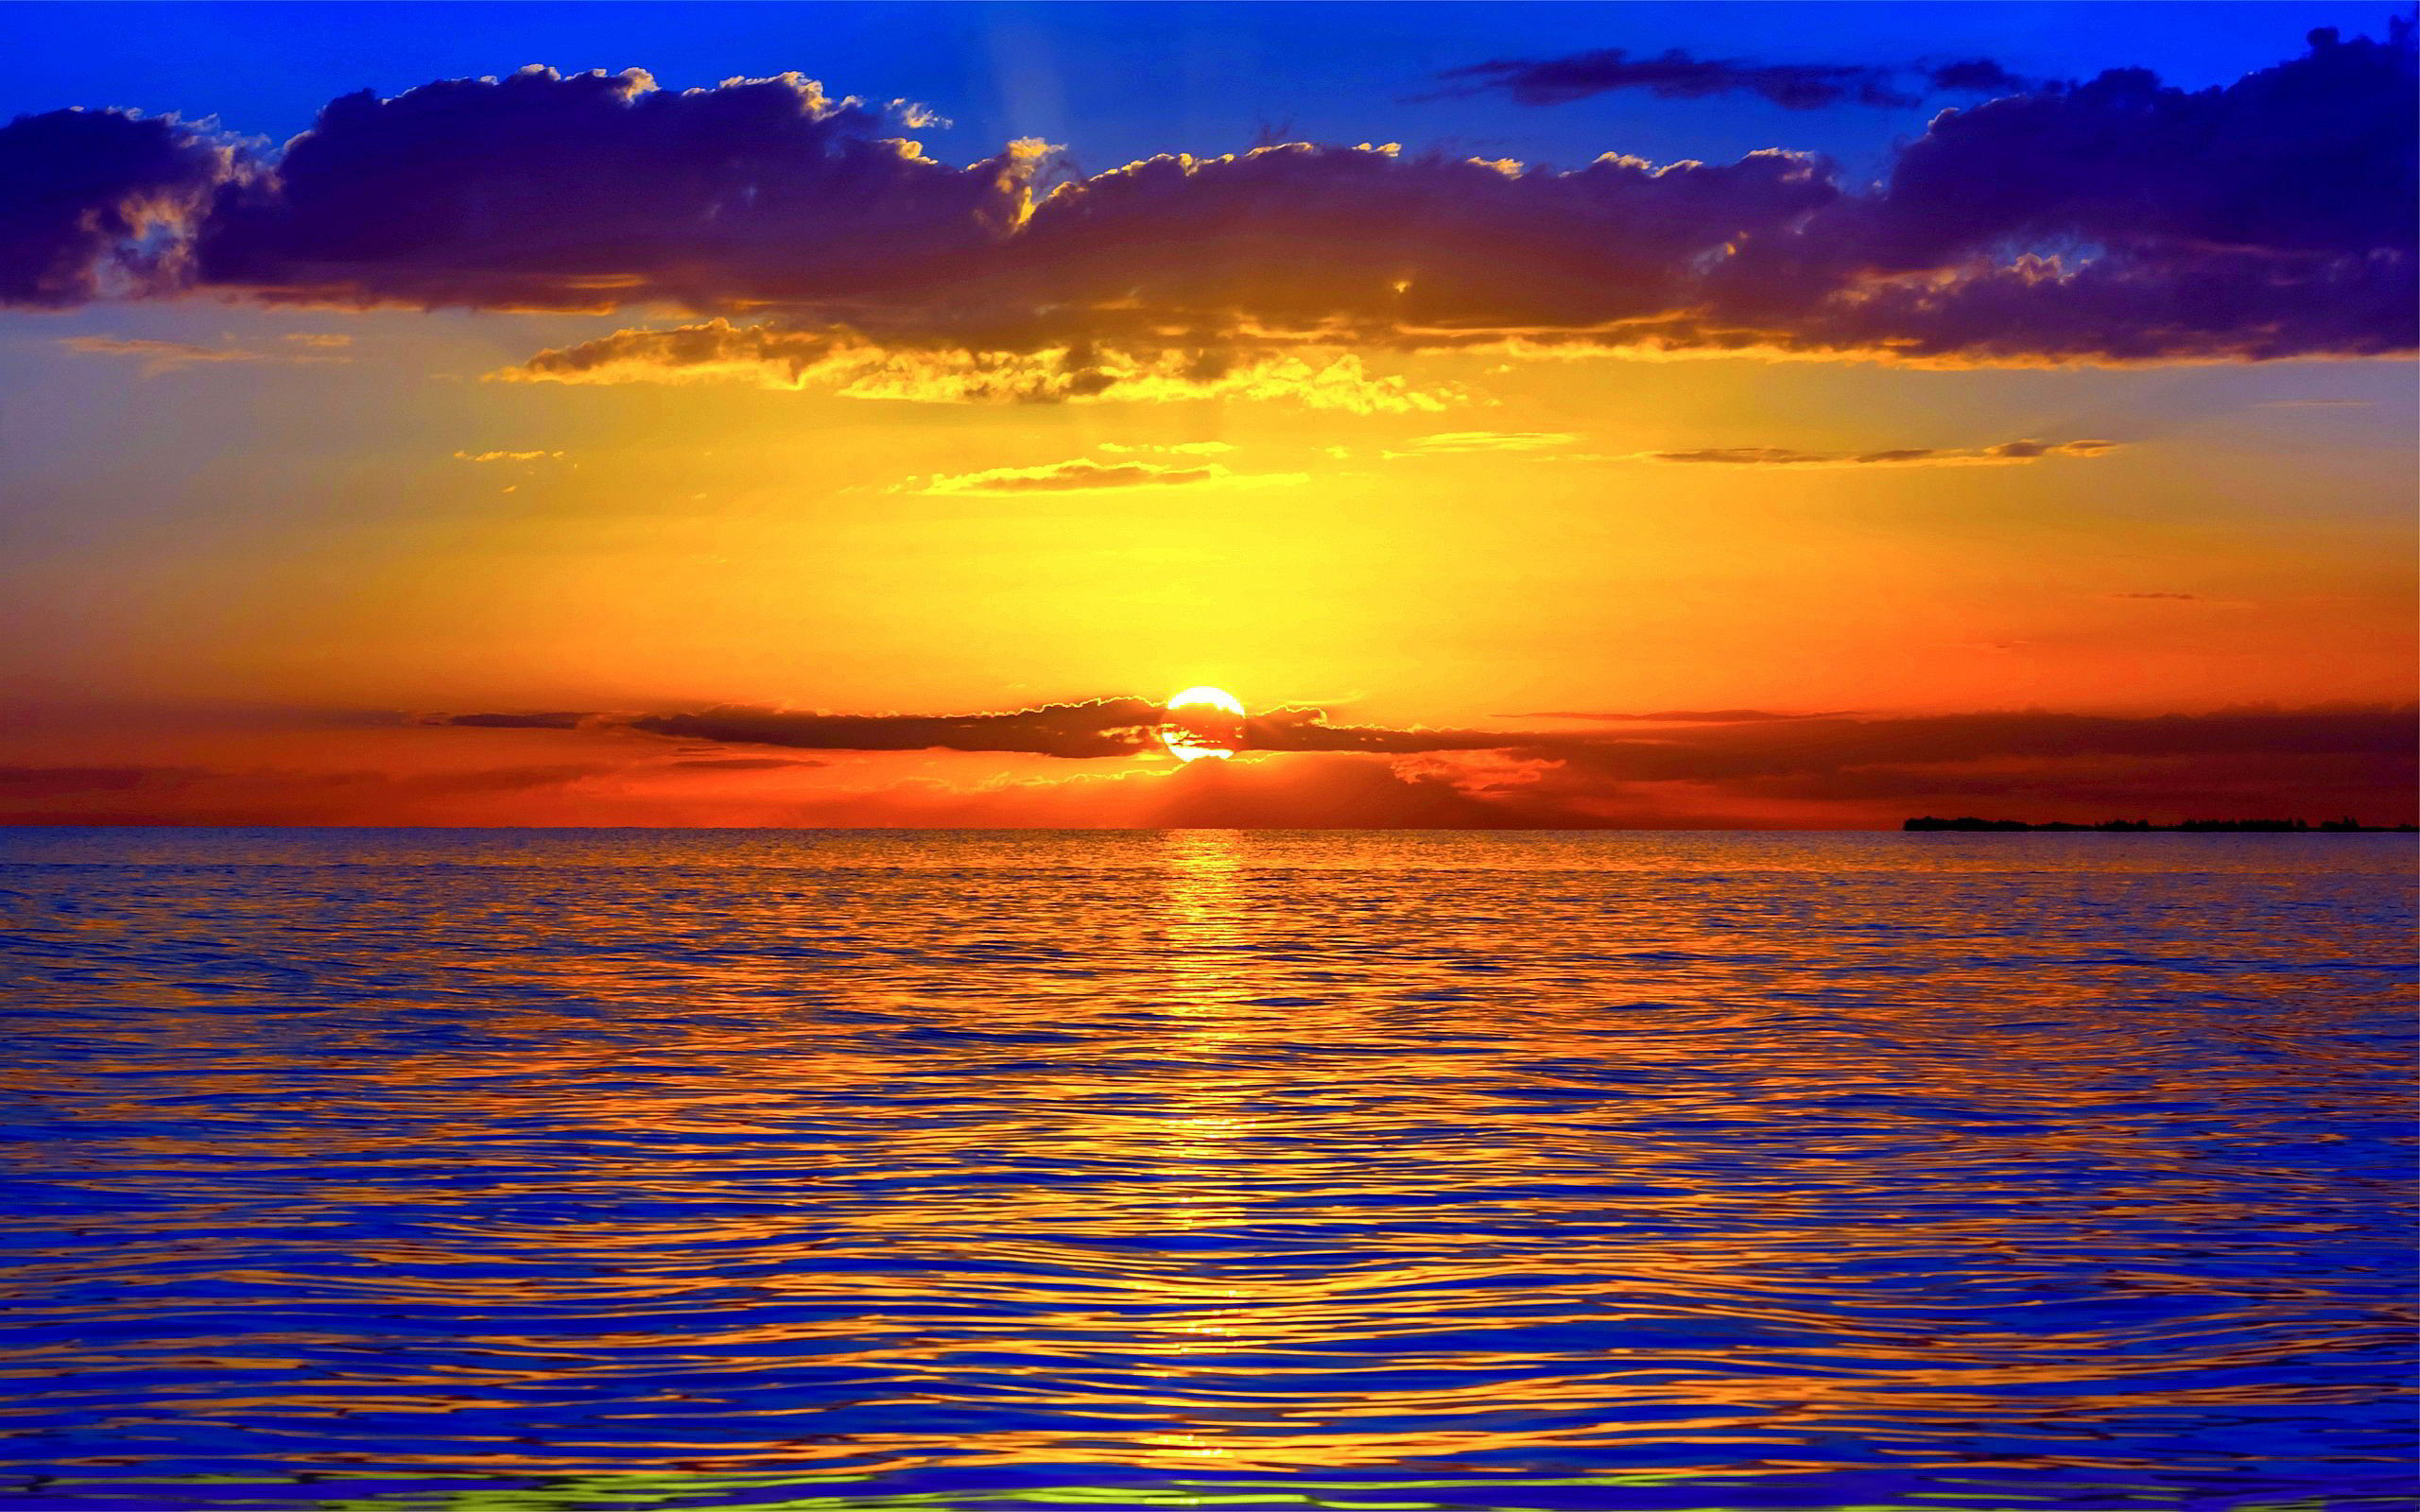 Amazing Ocean Sunset Photos Wallpaper Desktop Images Background Photos Download Hd Windows Wallpaper Iphone Mac 2560 1600 Wallpaper Hd 2560x1600